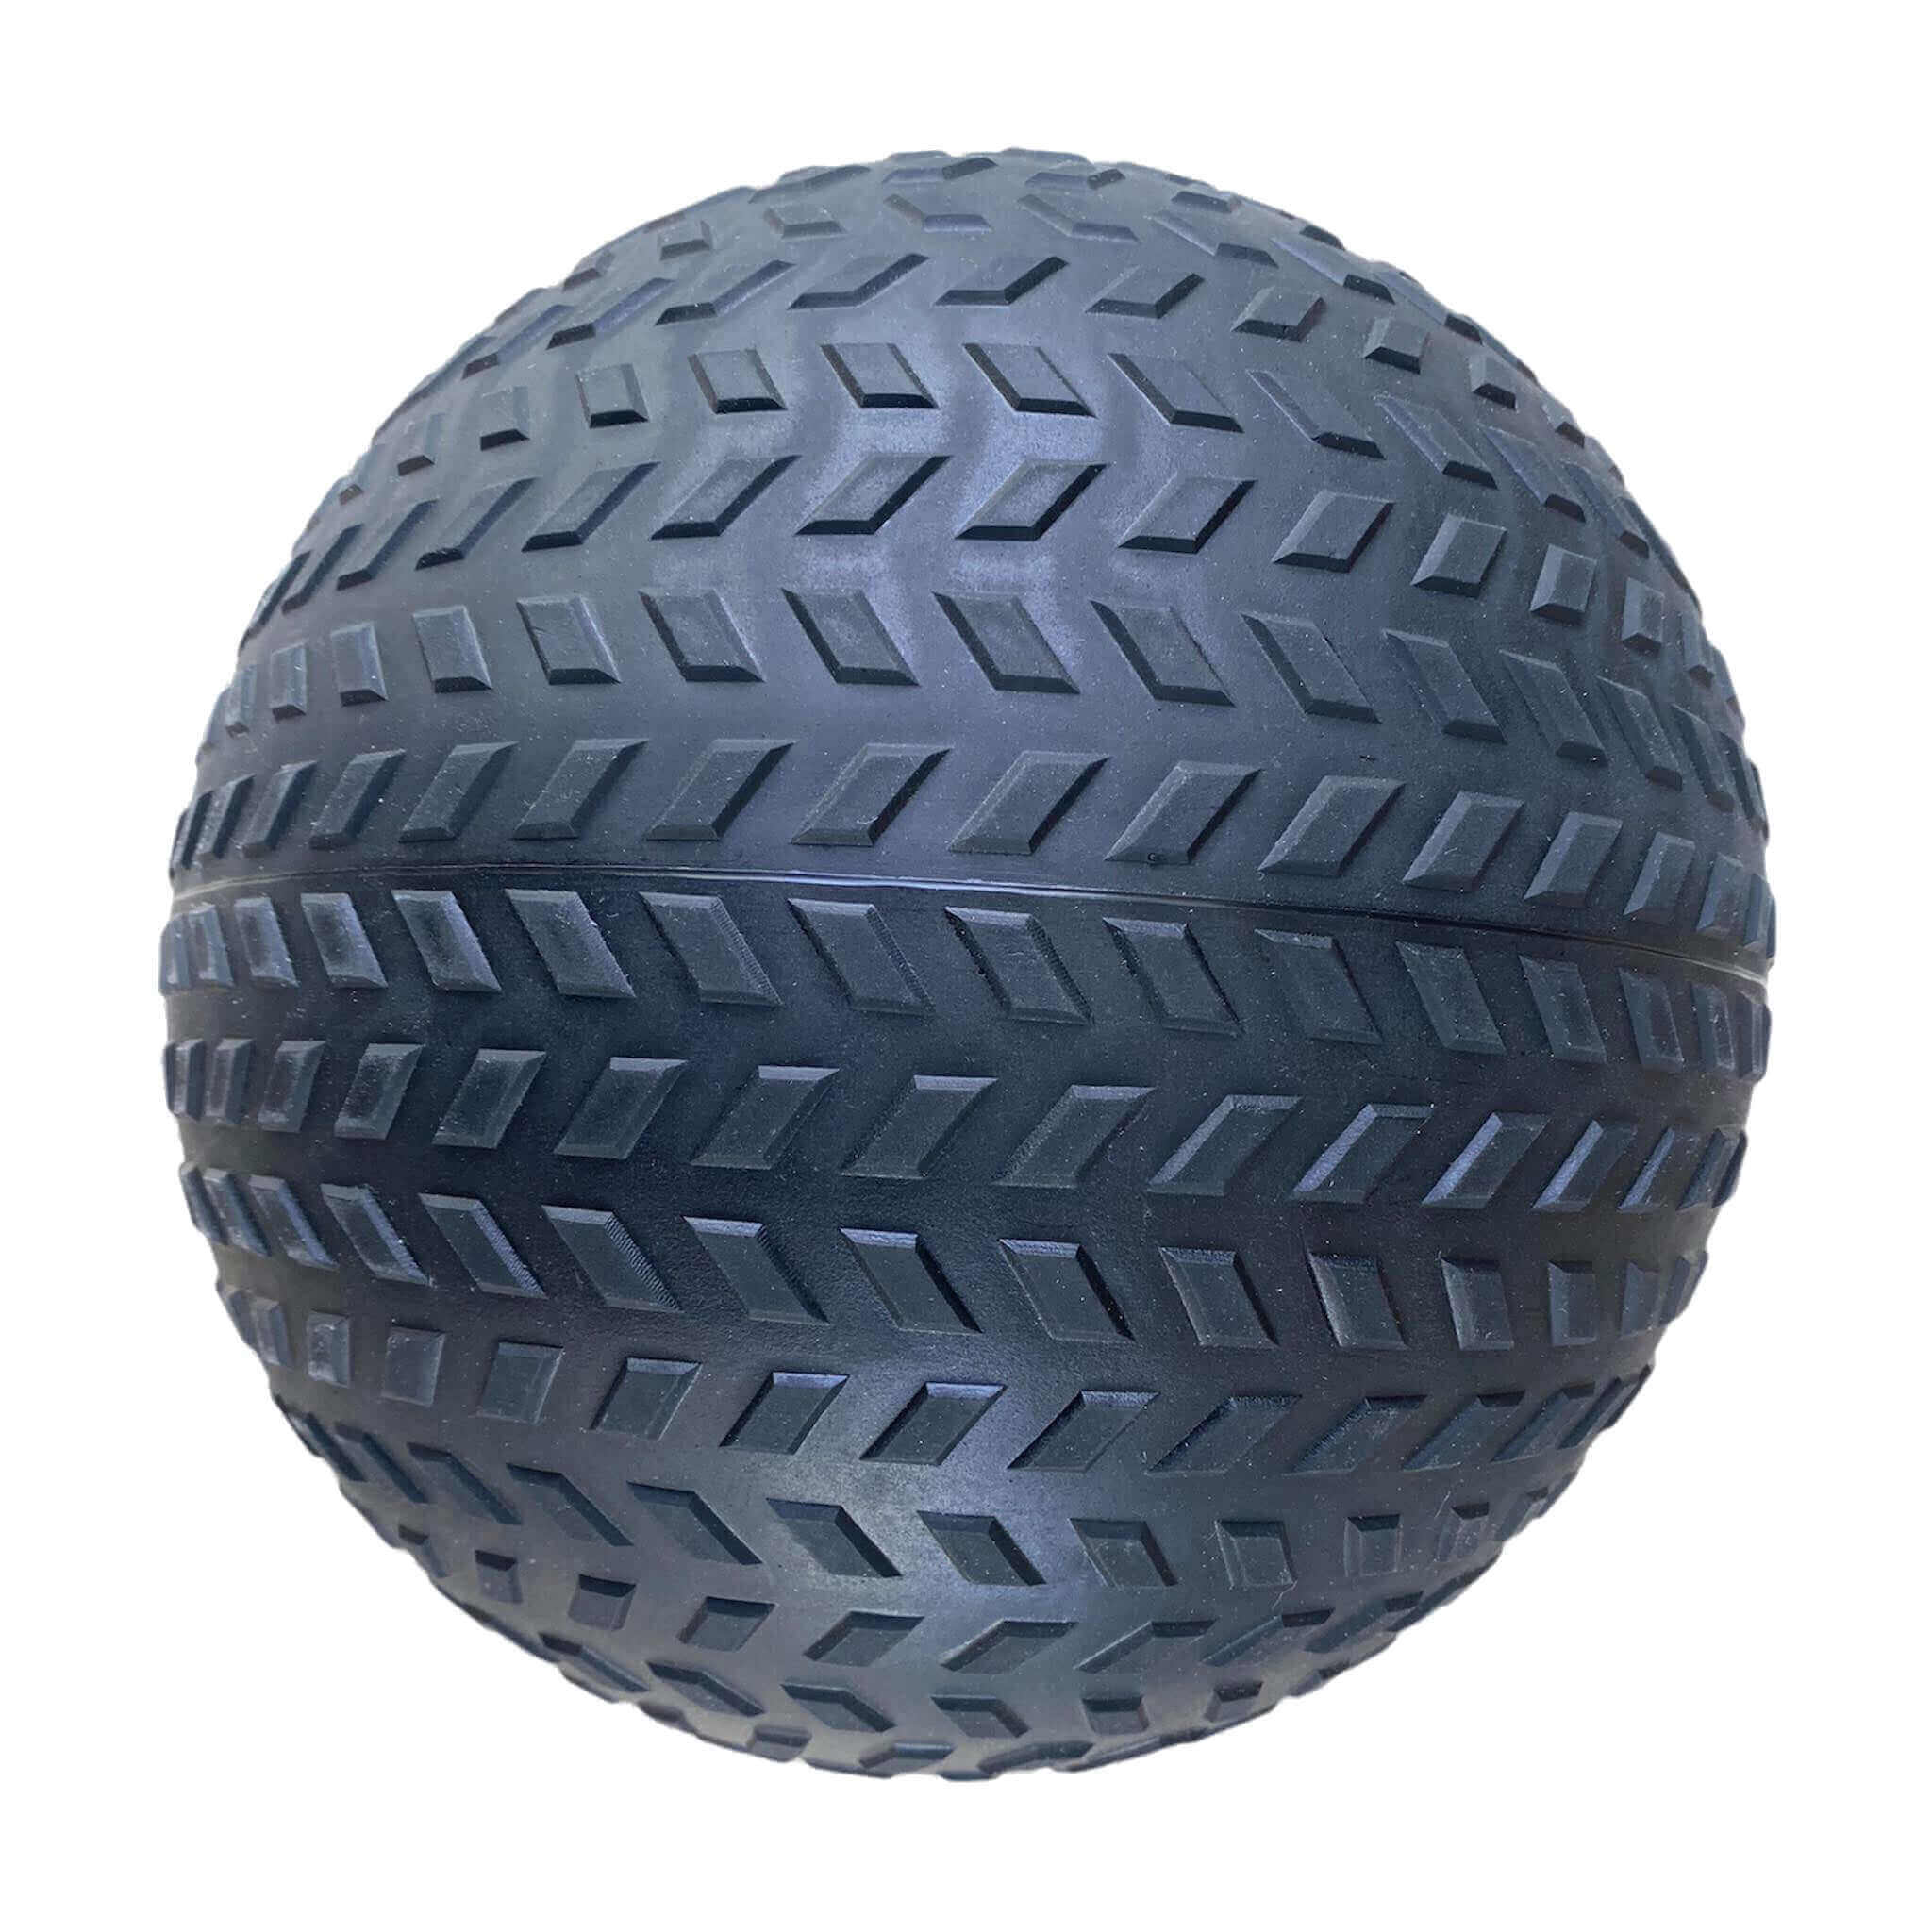 2kg Tyre Thread Slam Balls Fitness Exercise Sand Bag | INSOURCE